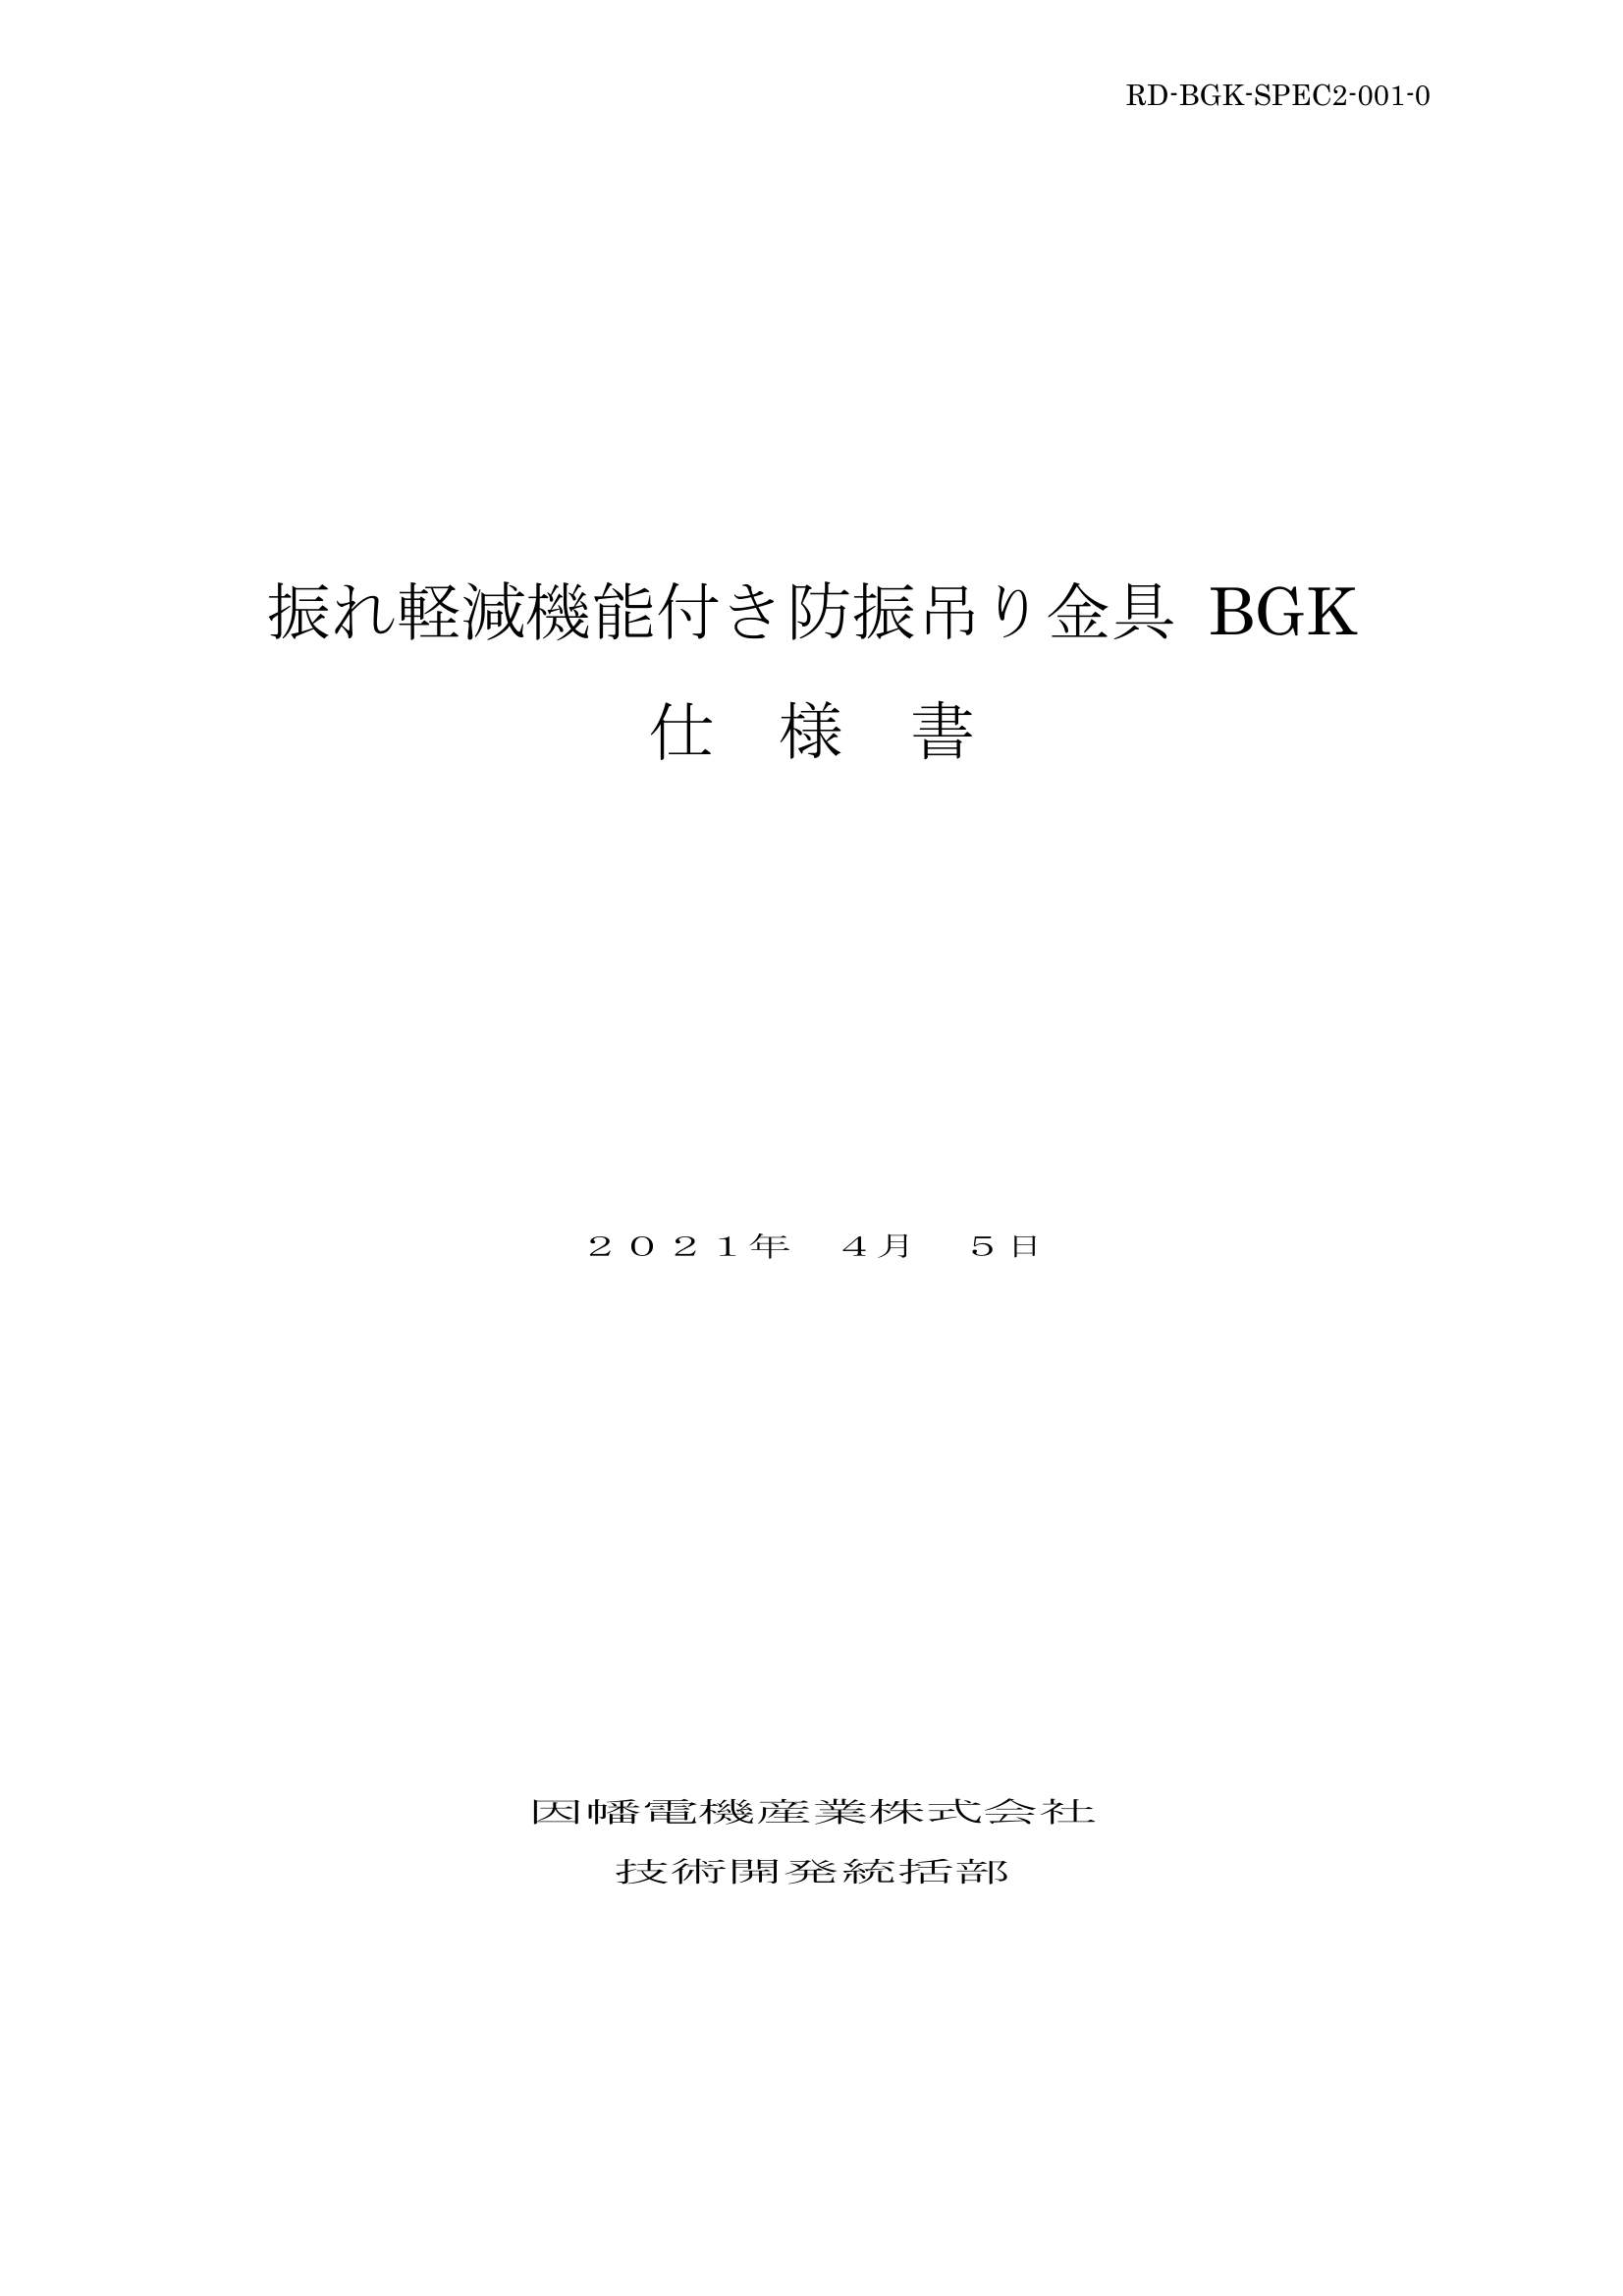 BGK_仕様書_20210405.pdf